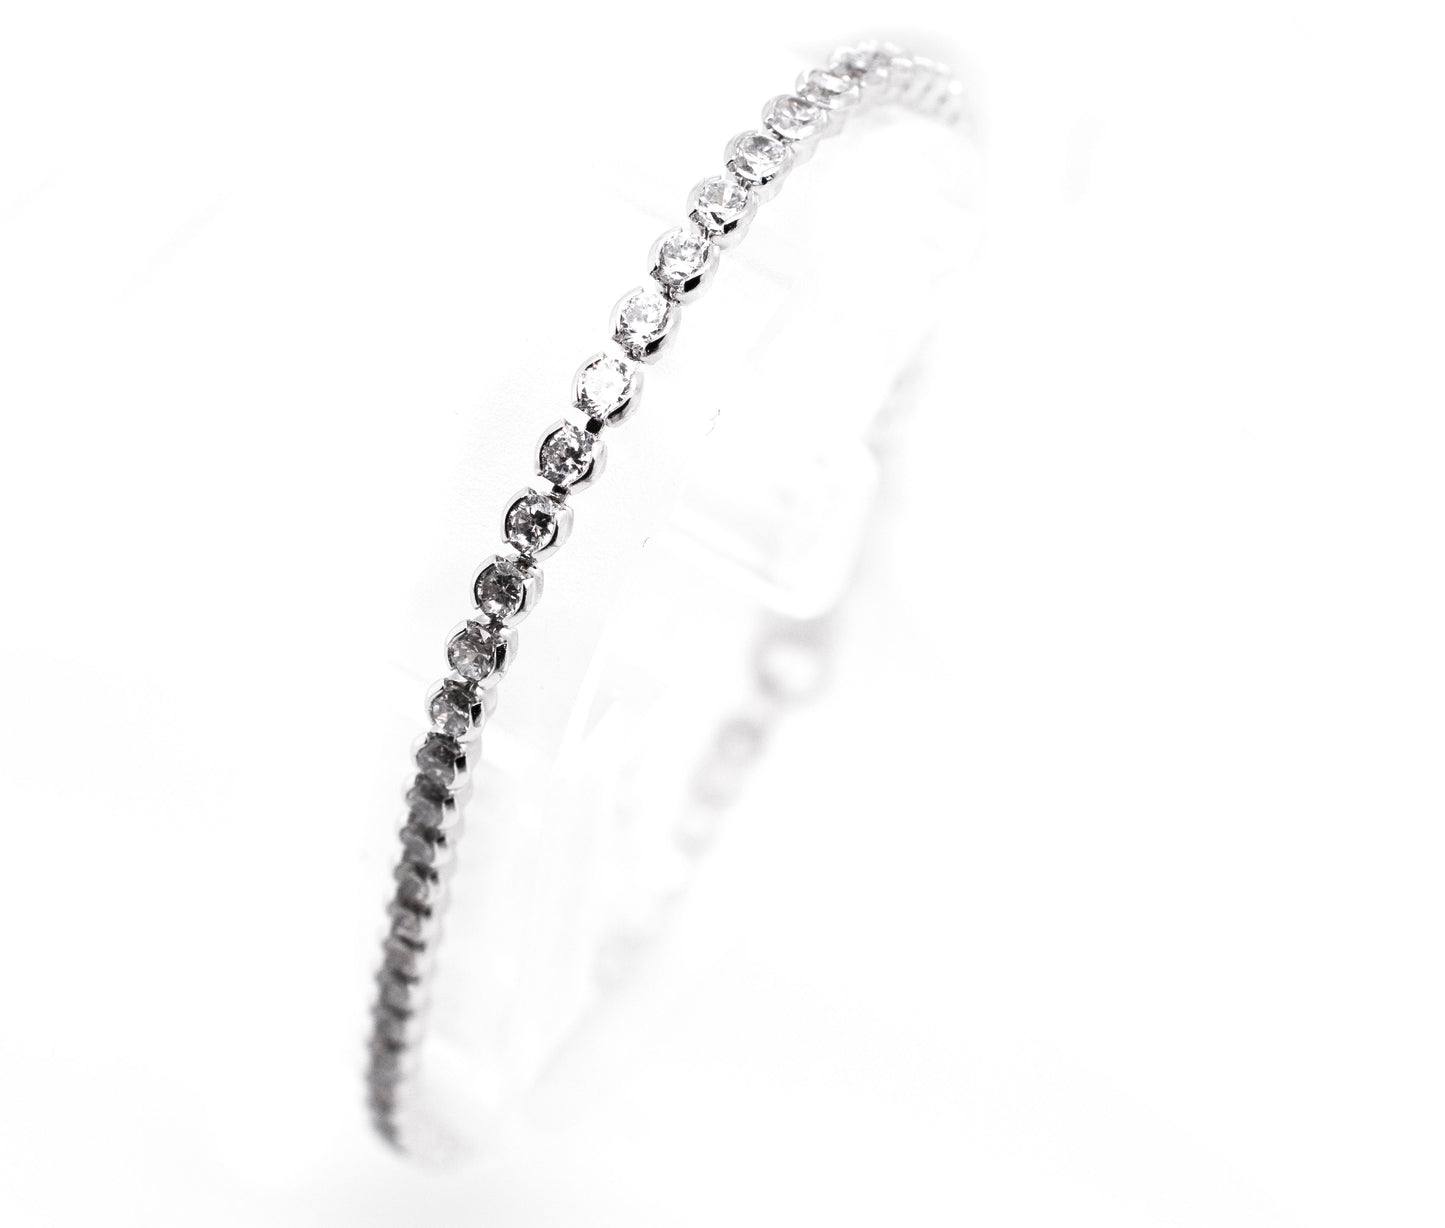 An elegant Super Silver Round Cubic Zirconia Tennis Bracelet with dainty diamonds on it.